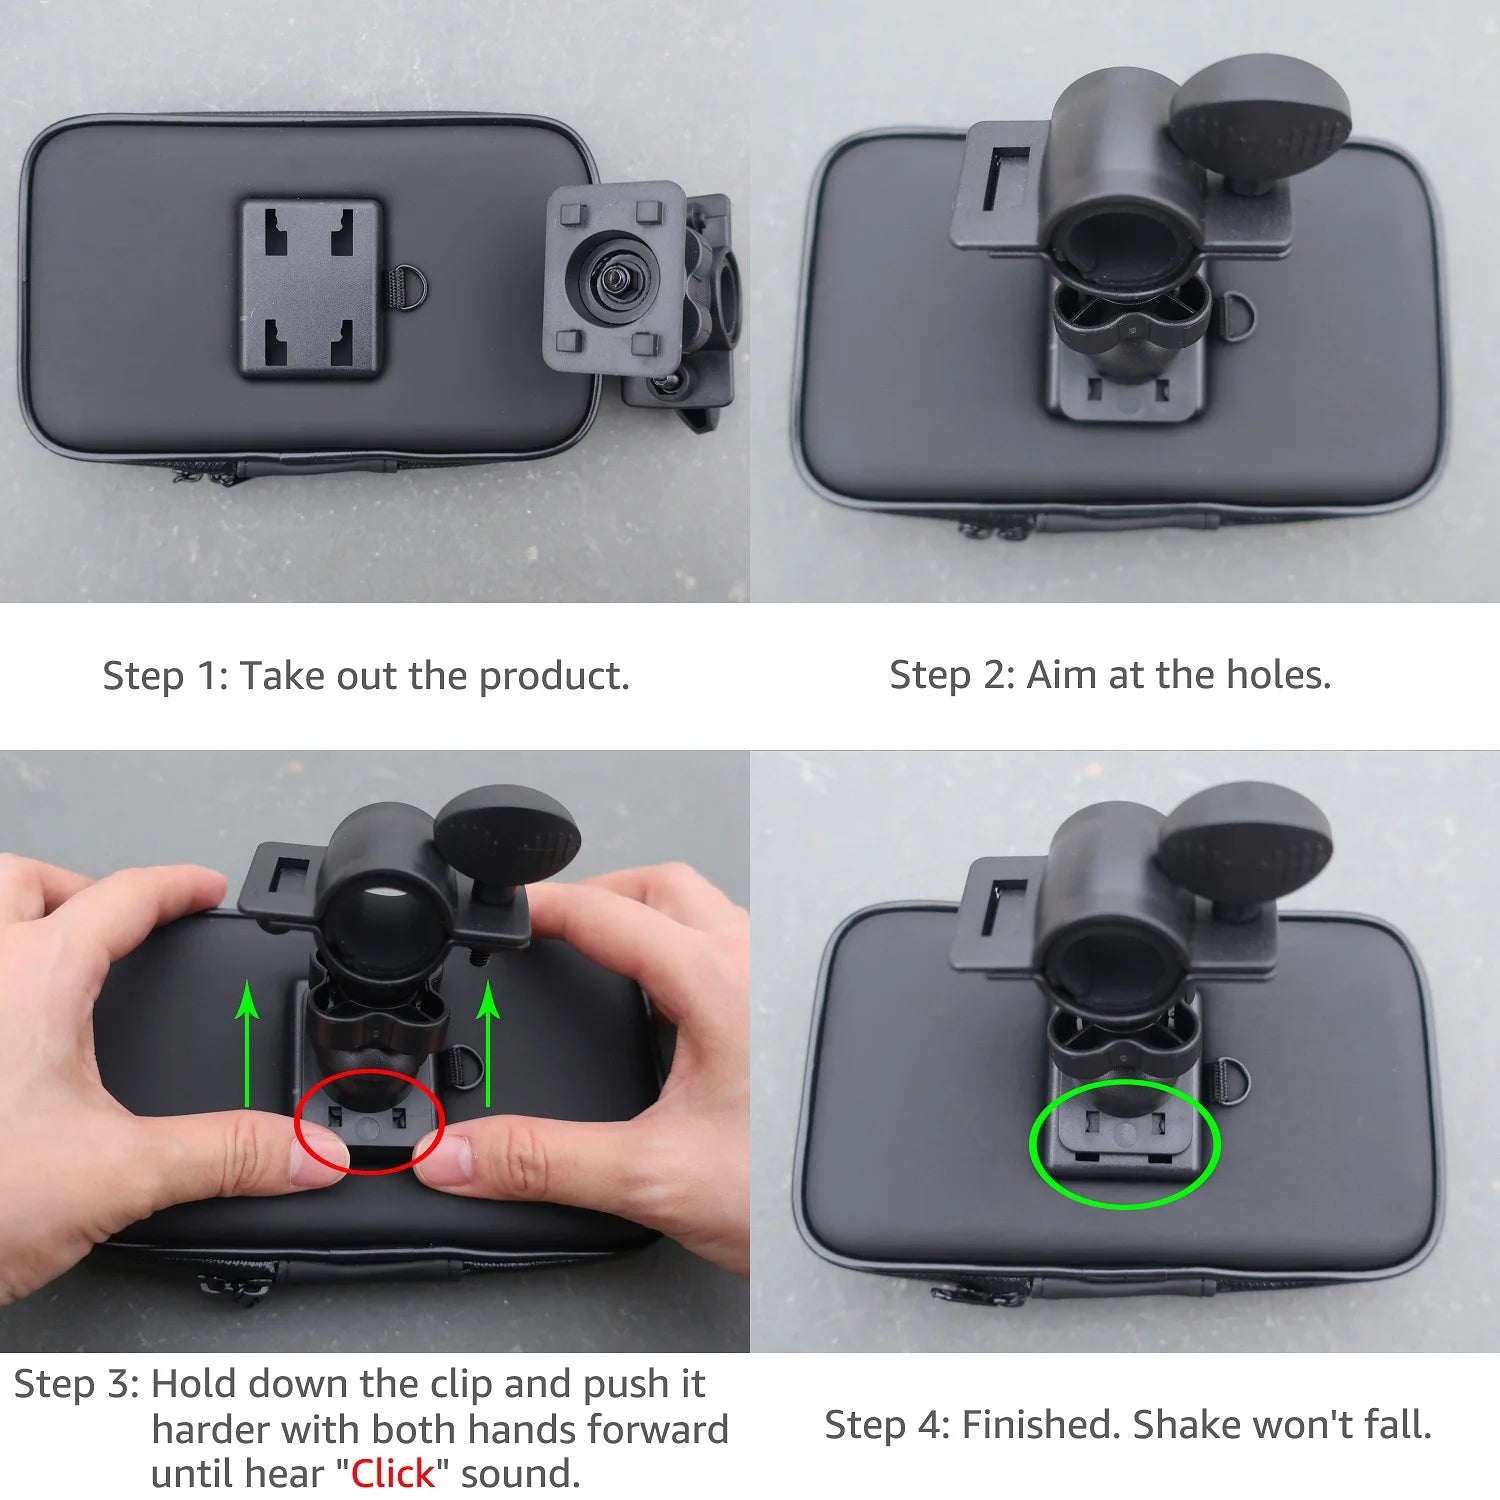 Waterproof Bicycle Phone Holder Motorcycle Bike Handlebar Phone Case Bag for iPhone 15 Pro Max 14 Samsung Bike Phone Stand Mount